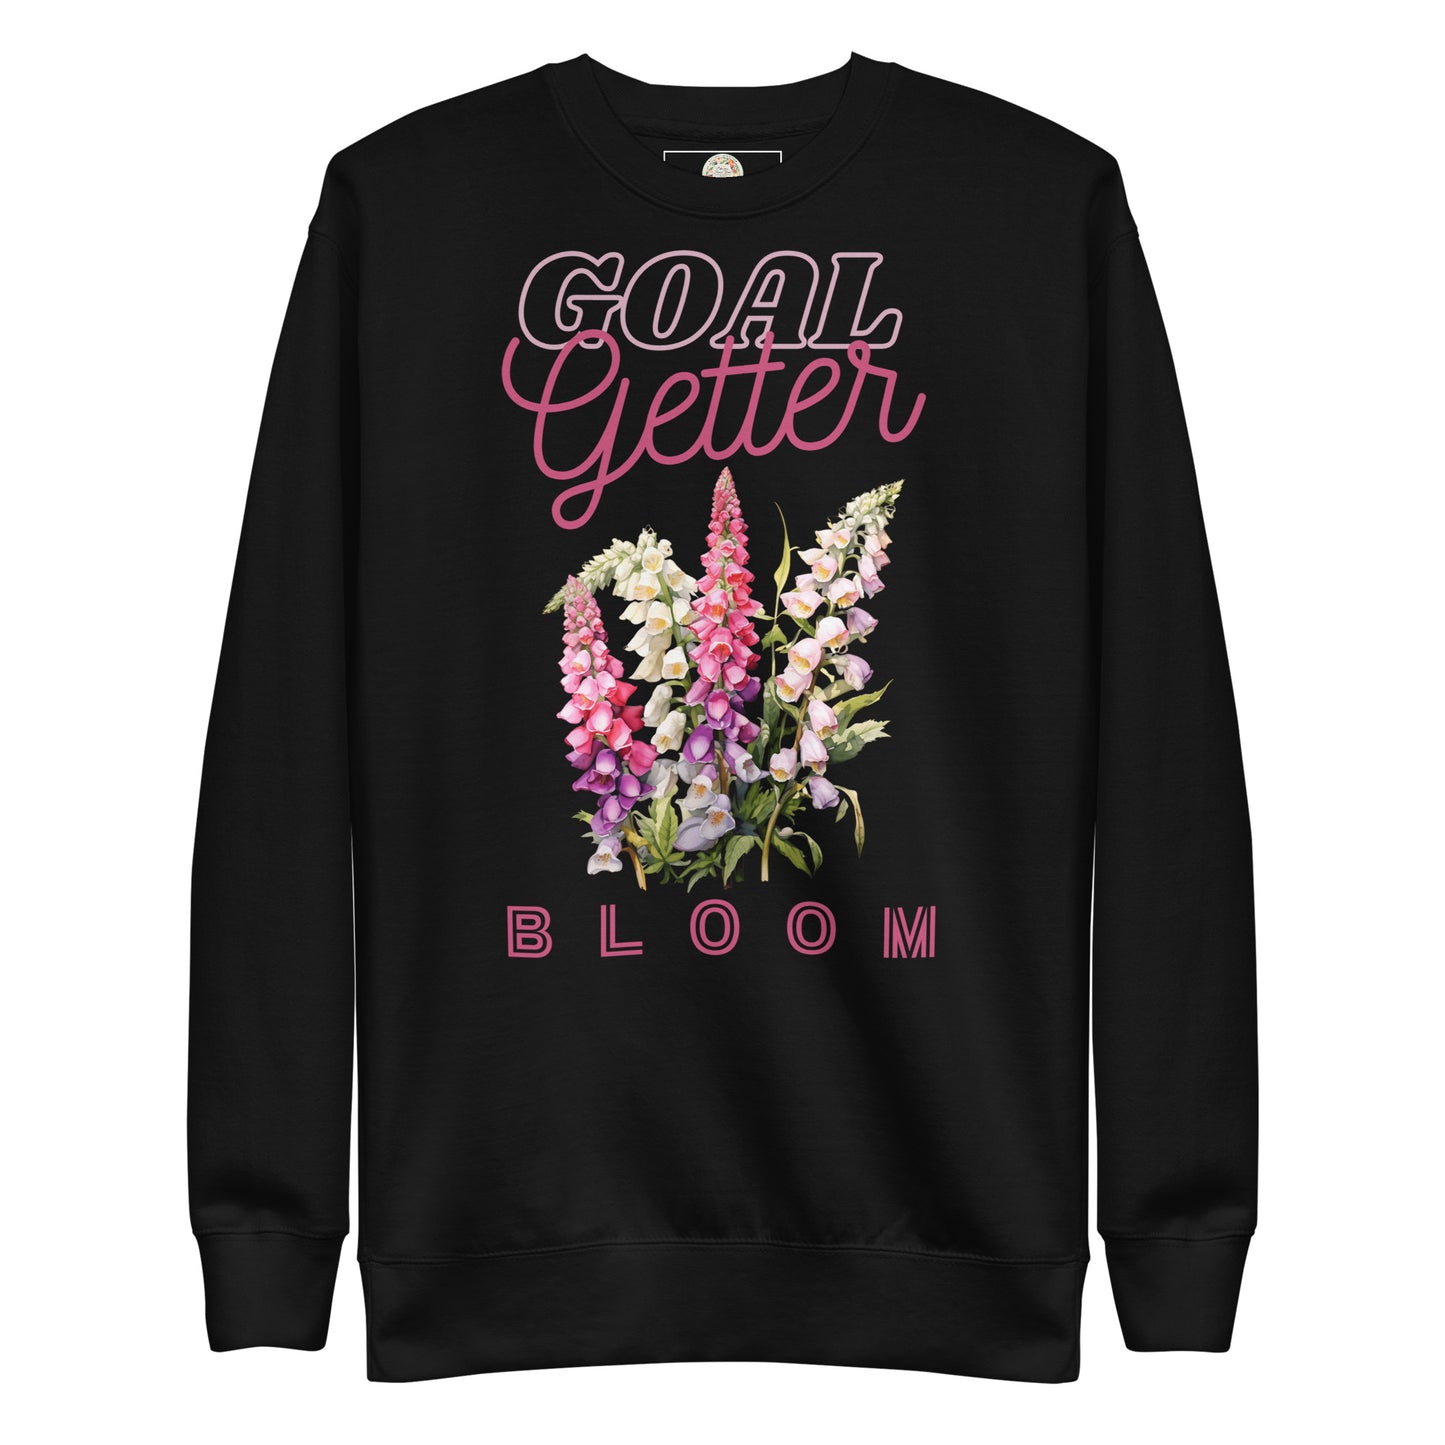 "Sweet Floral Tee's" Goal Getter - Unisex Premium Sweatshirt